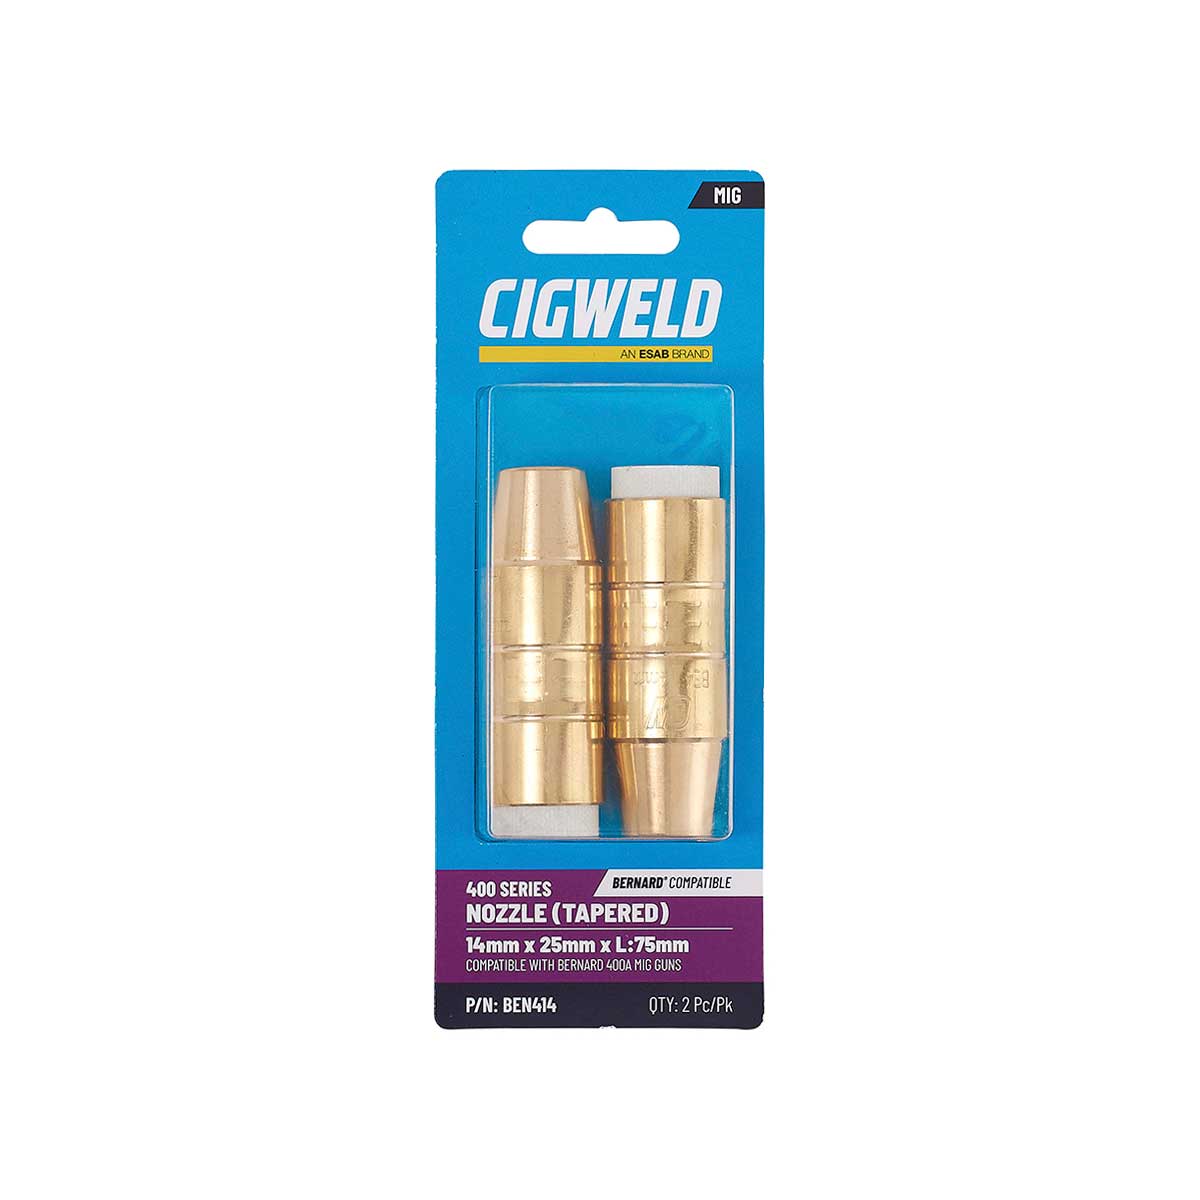 Cigweld Bernard Compatible Nozzle Tapered 14mm